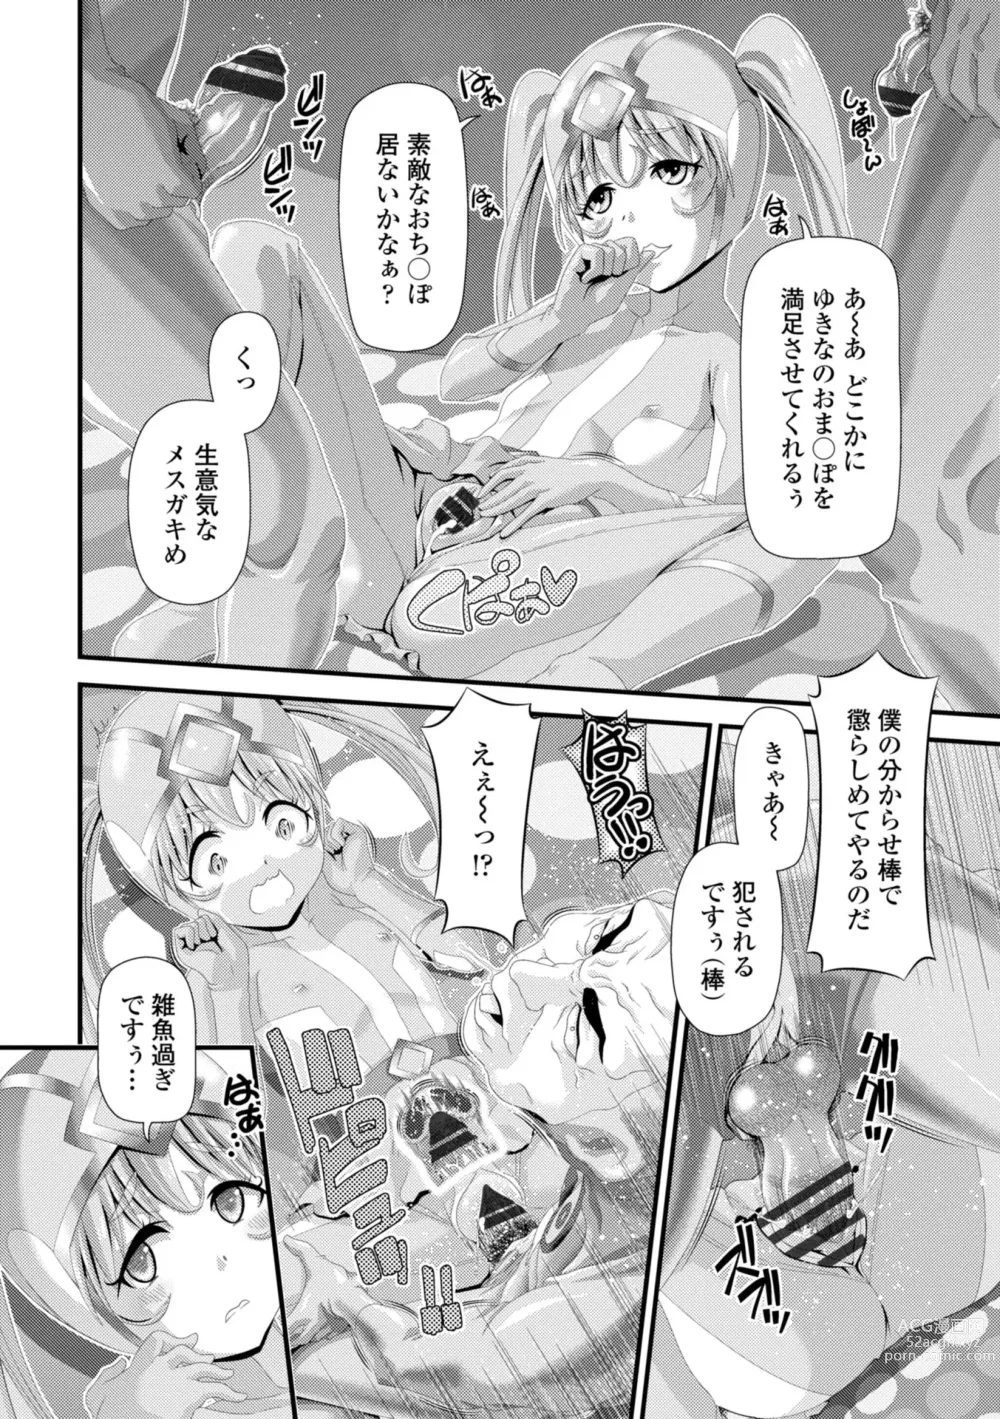 Page 10 of manga minimum material 1